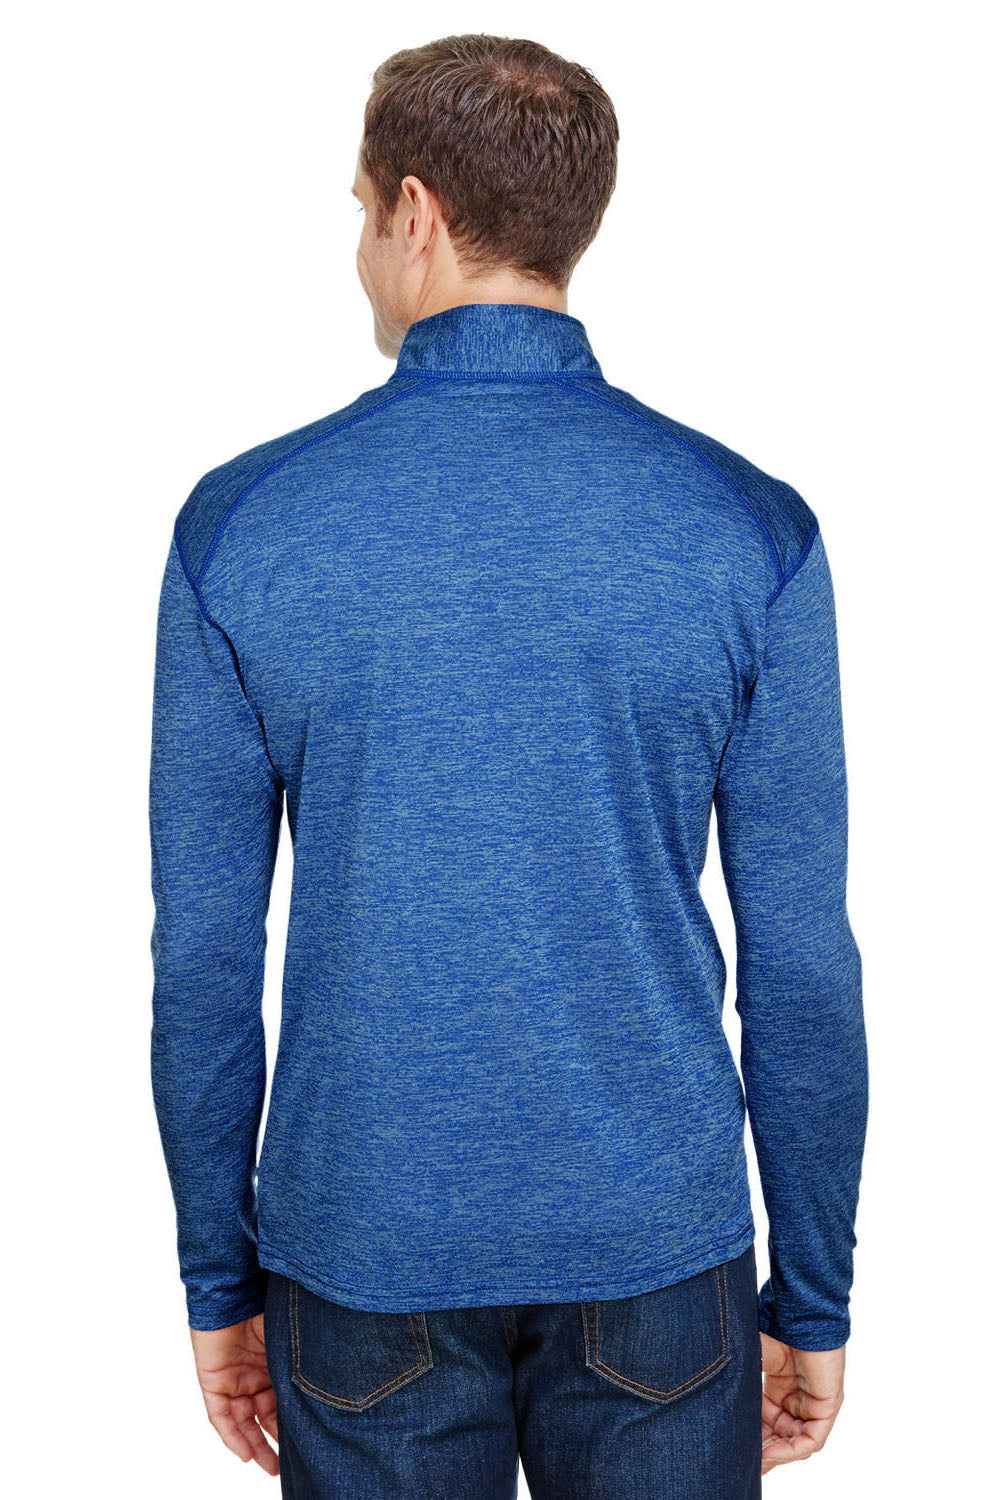 A4 N4010 Mens Tonal Space Dye Performance Moisture Wicking 1/4 Zip Sweatshirt Royal Blue Back